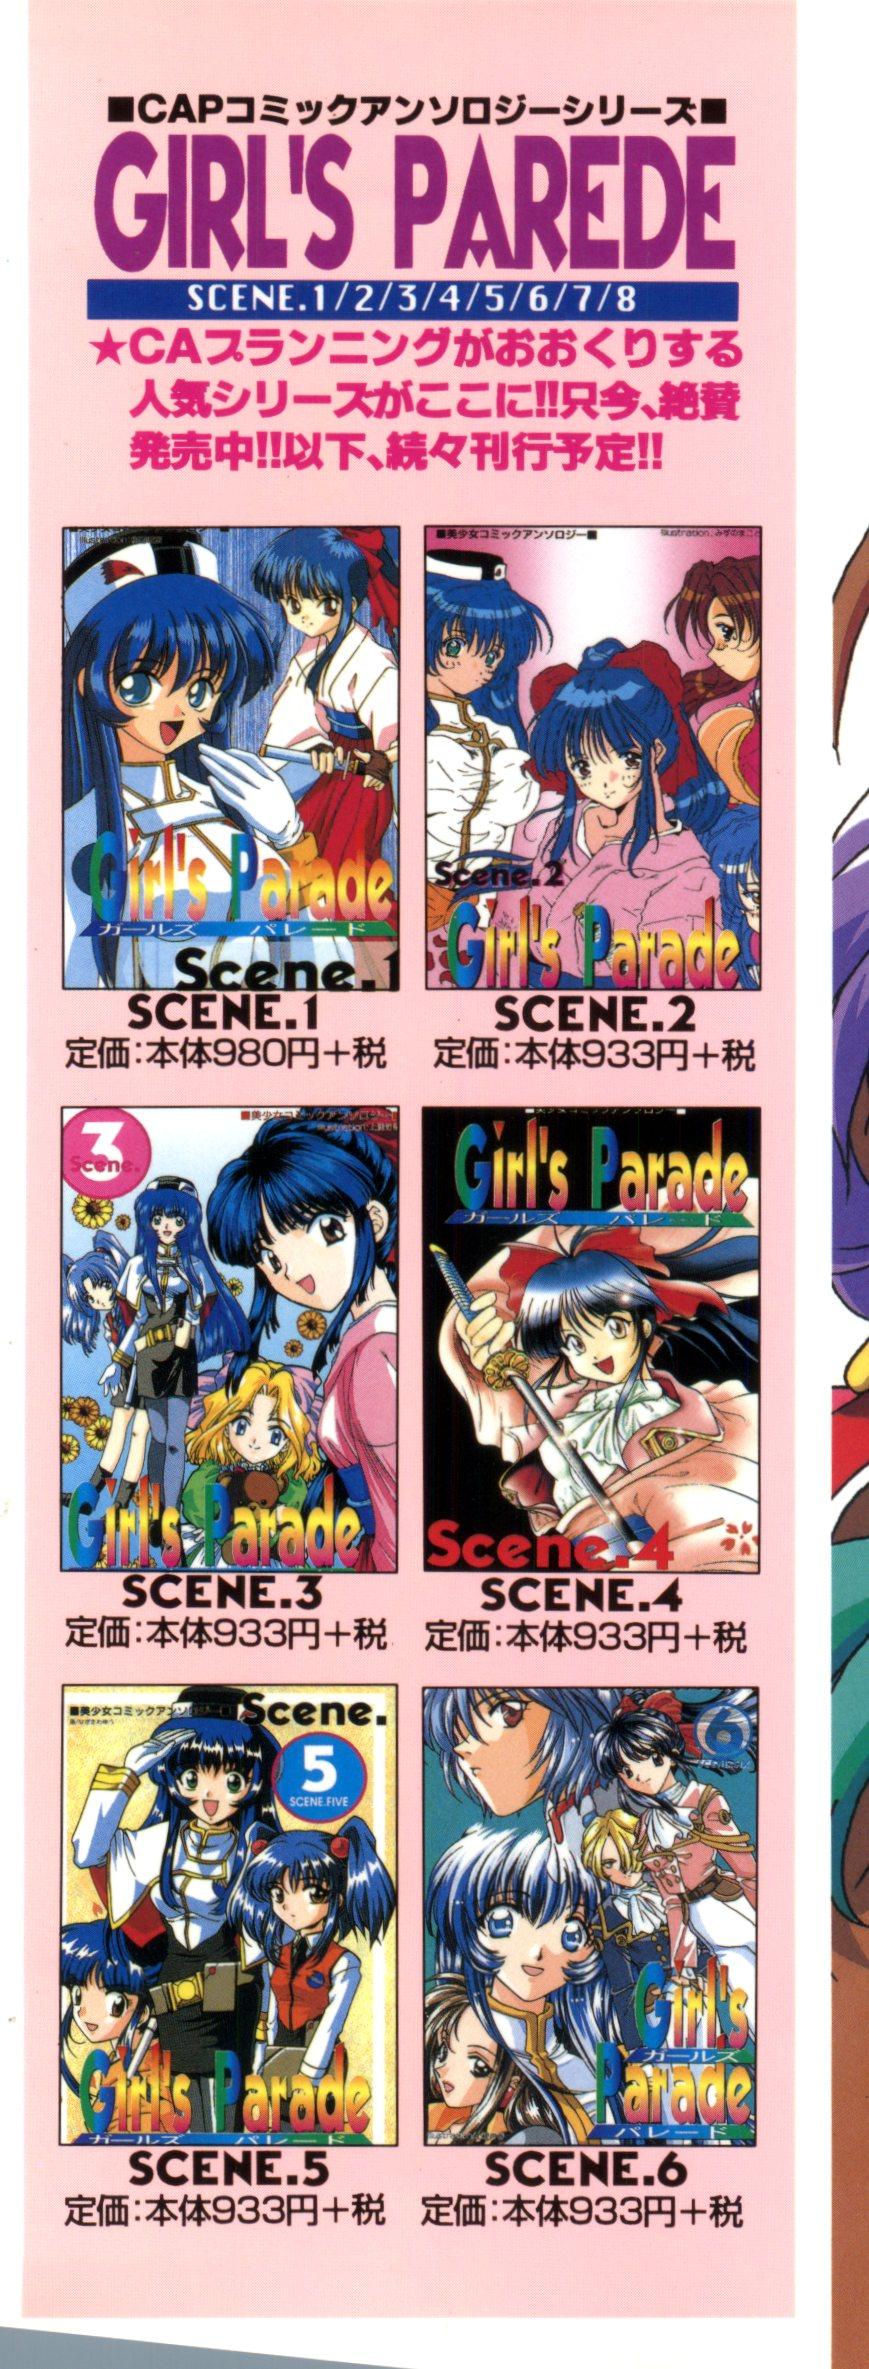 Sextape Girl's Parade Scene 9 - Neon genesis evangelion Final fantasy vii Sakura taisen Gaogaigar Revolutionary girl utena Saber marionette Mahou tsukai tai Hot - Page 2